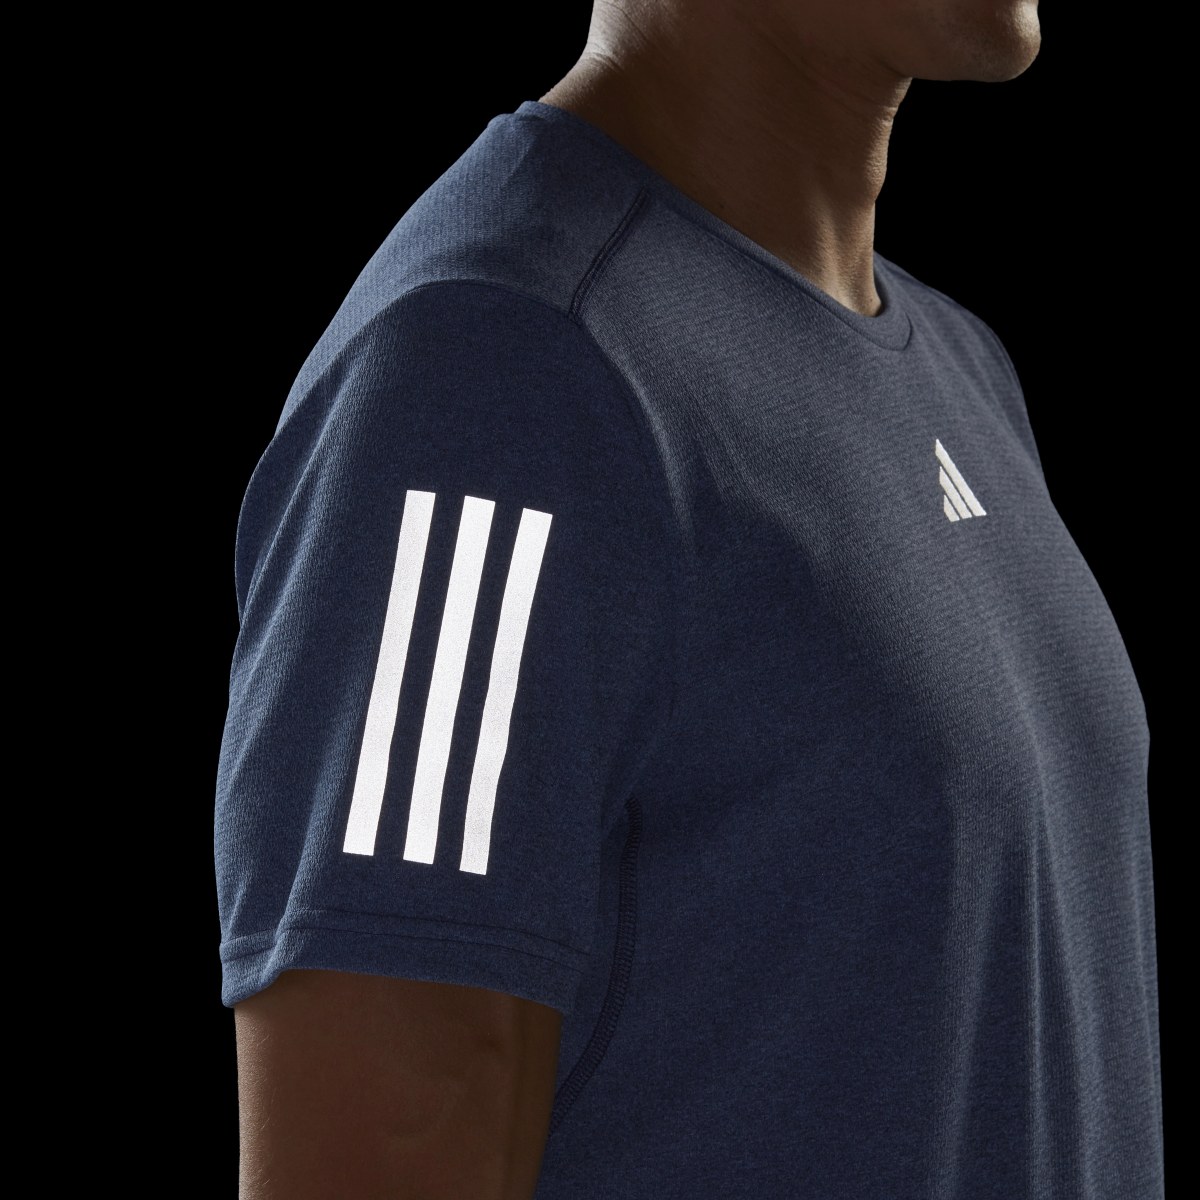 Adidas Own the Run Heather T-Shirt. 8